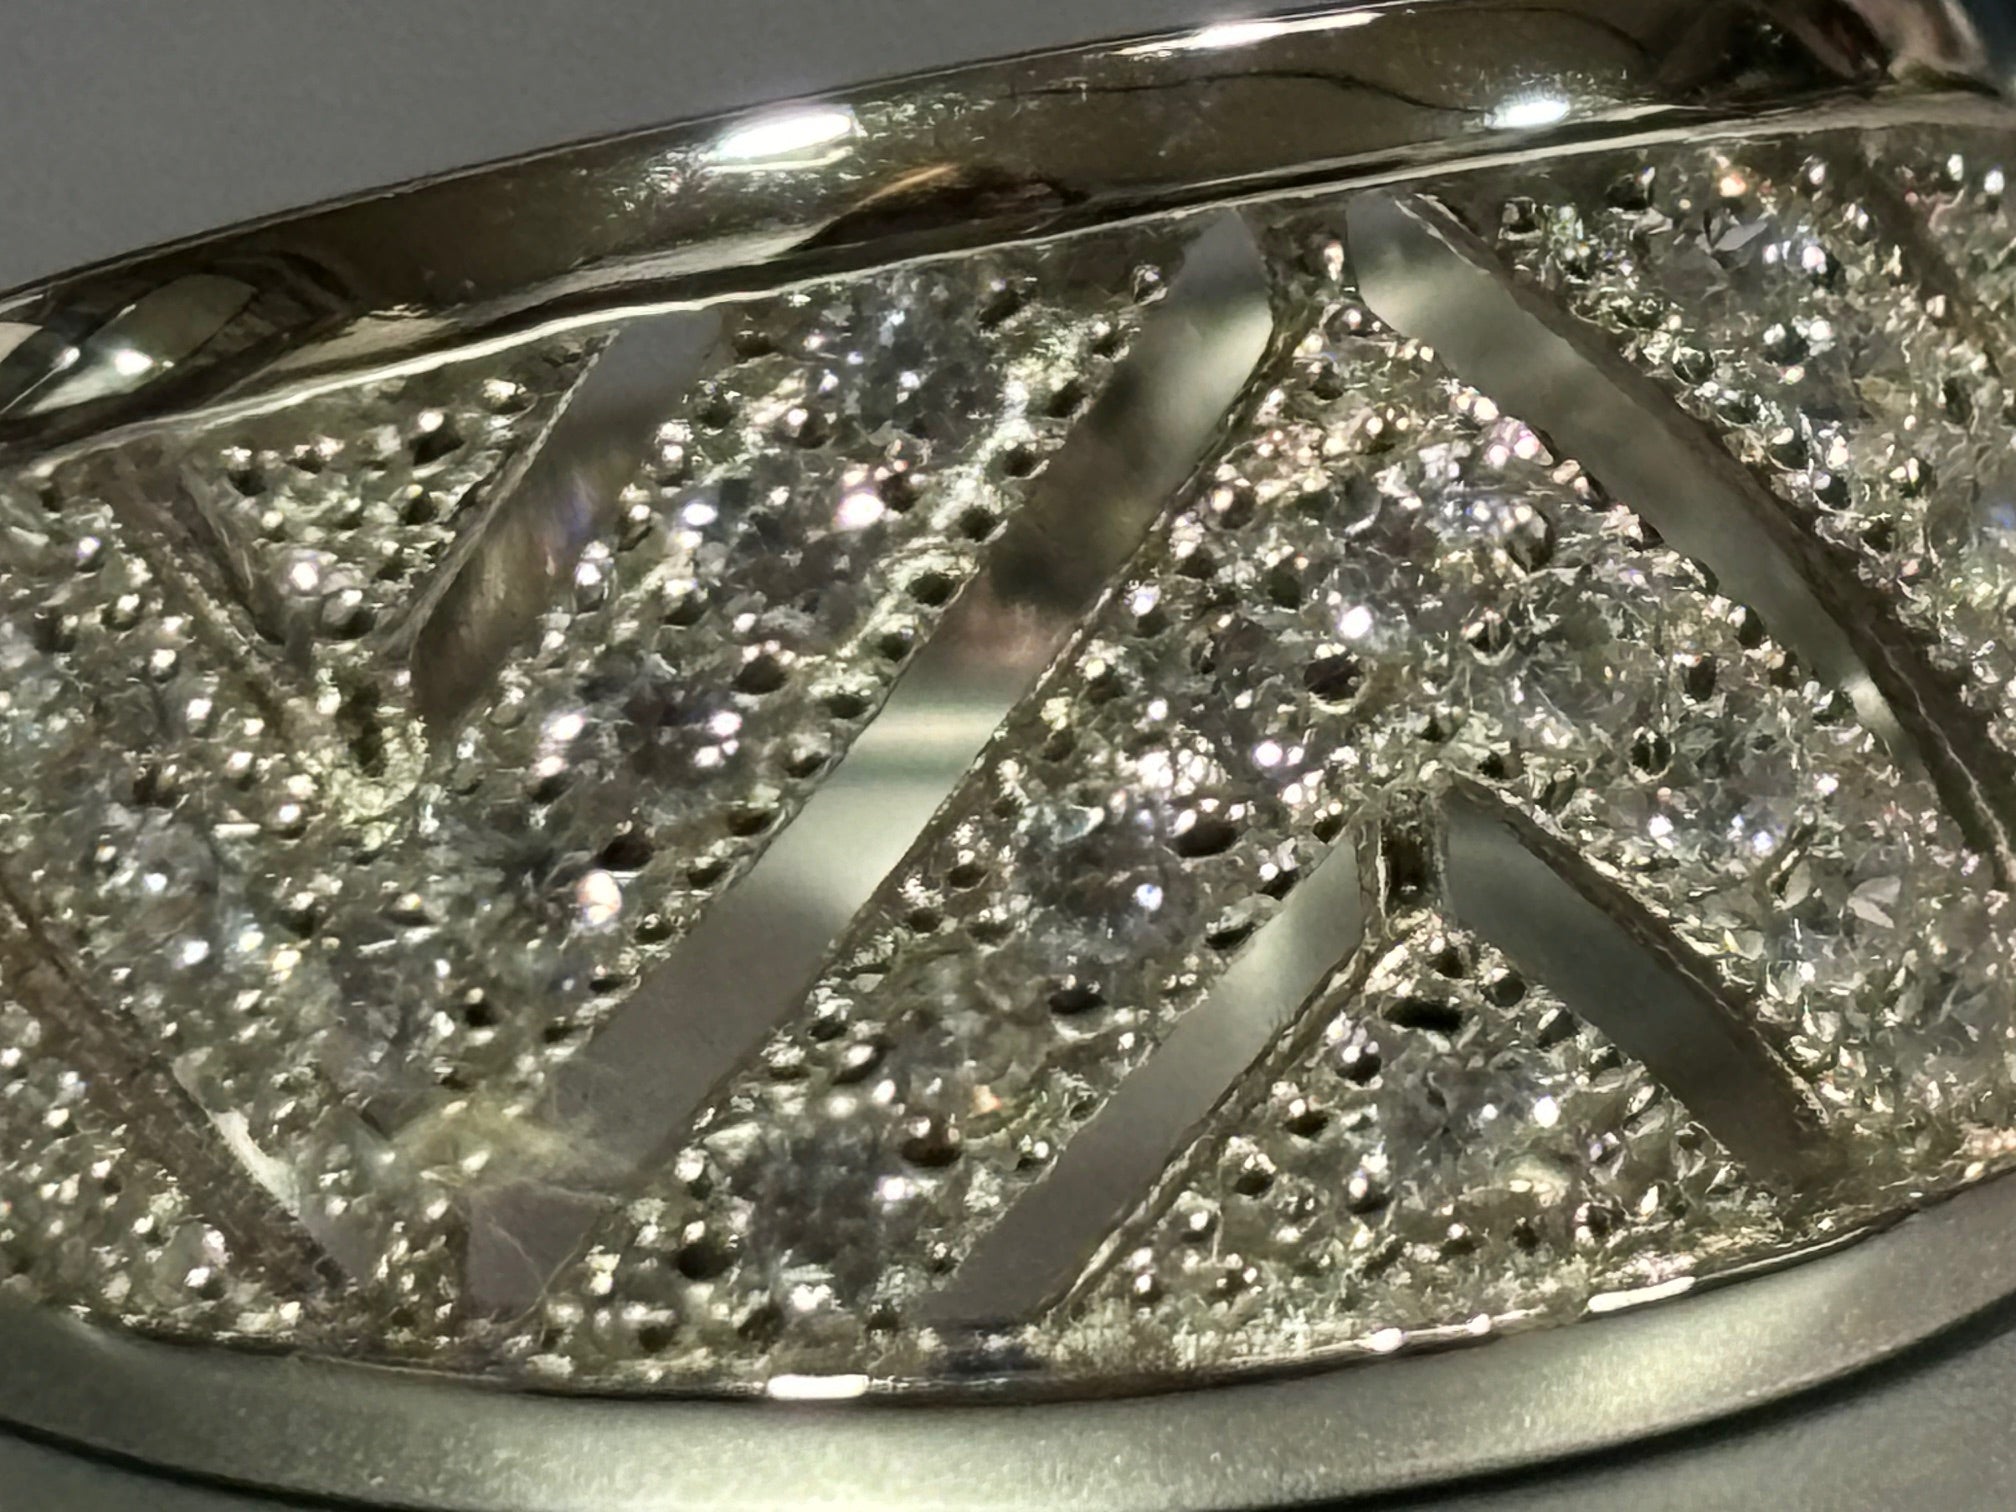 Silver Dress Ring